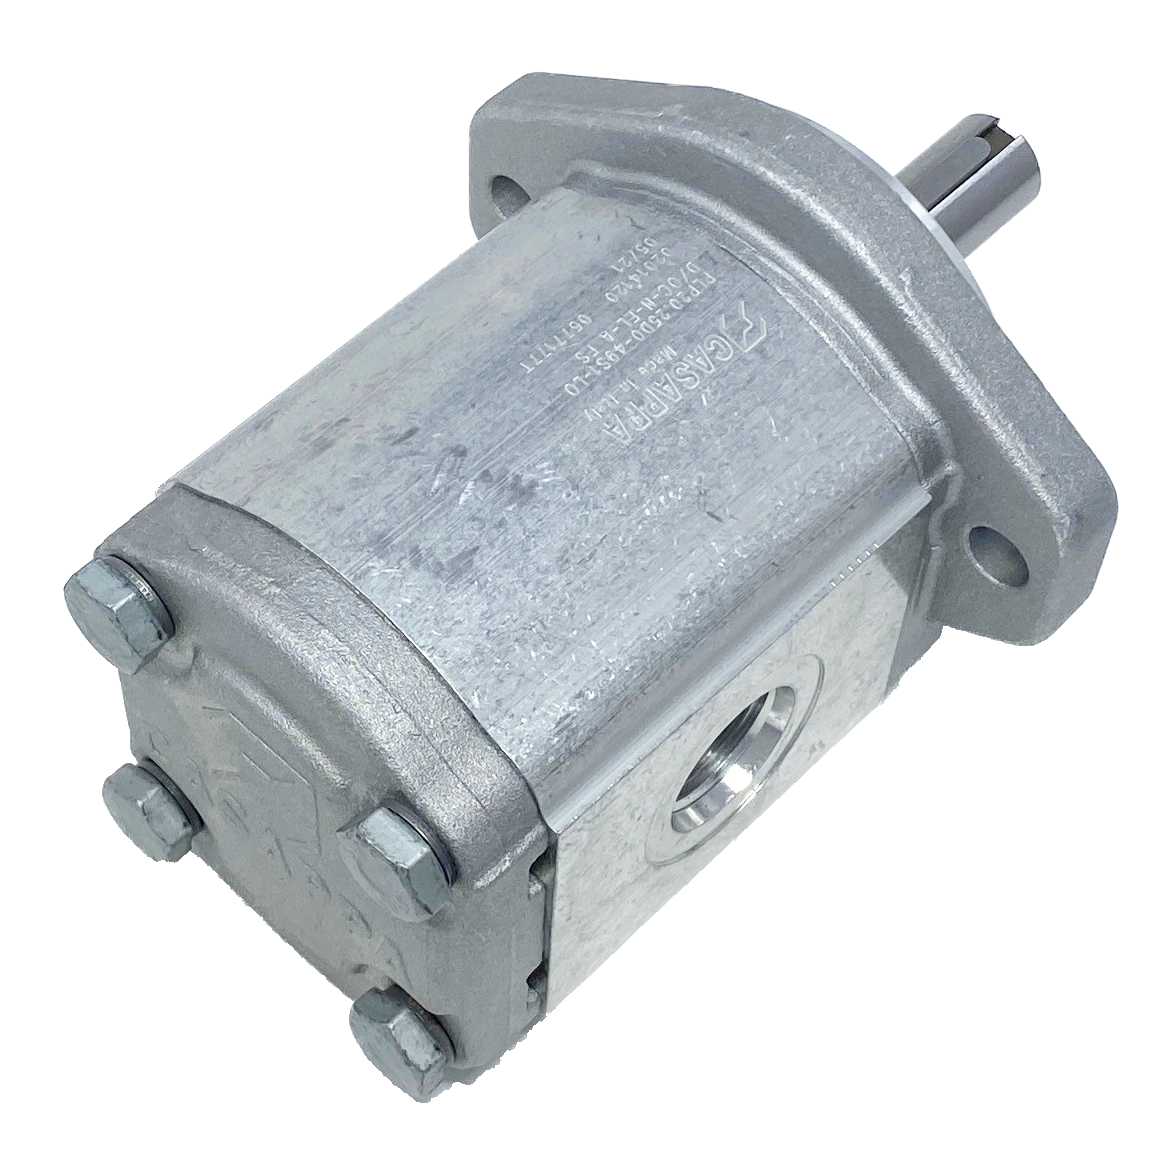 PLM20.25R0-49S1-LOC/OD-N-EL : Casappa Polaris Gear Motor, 26.42cc, 2465psi Rated, 3045RPM, Reversible Rear External Drain, 3/4" Bore x 3/16" Key Shaft, SAE A 2-Bolt Flange, 0.625 (5/8") #10 SAE Inlet, 0.75 (3/4") #12 SAE Outlet, Aluminum Body & Flange